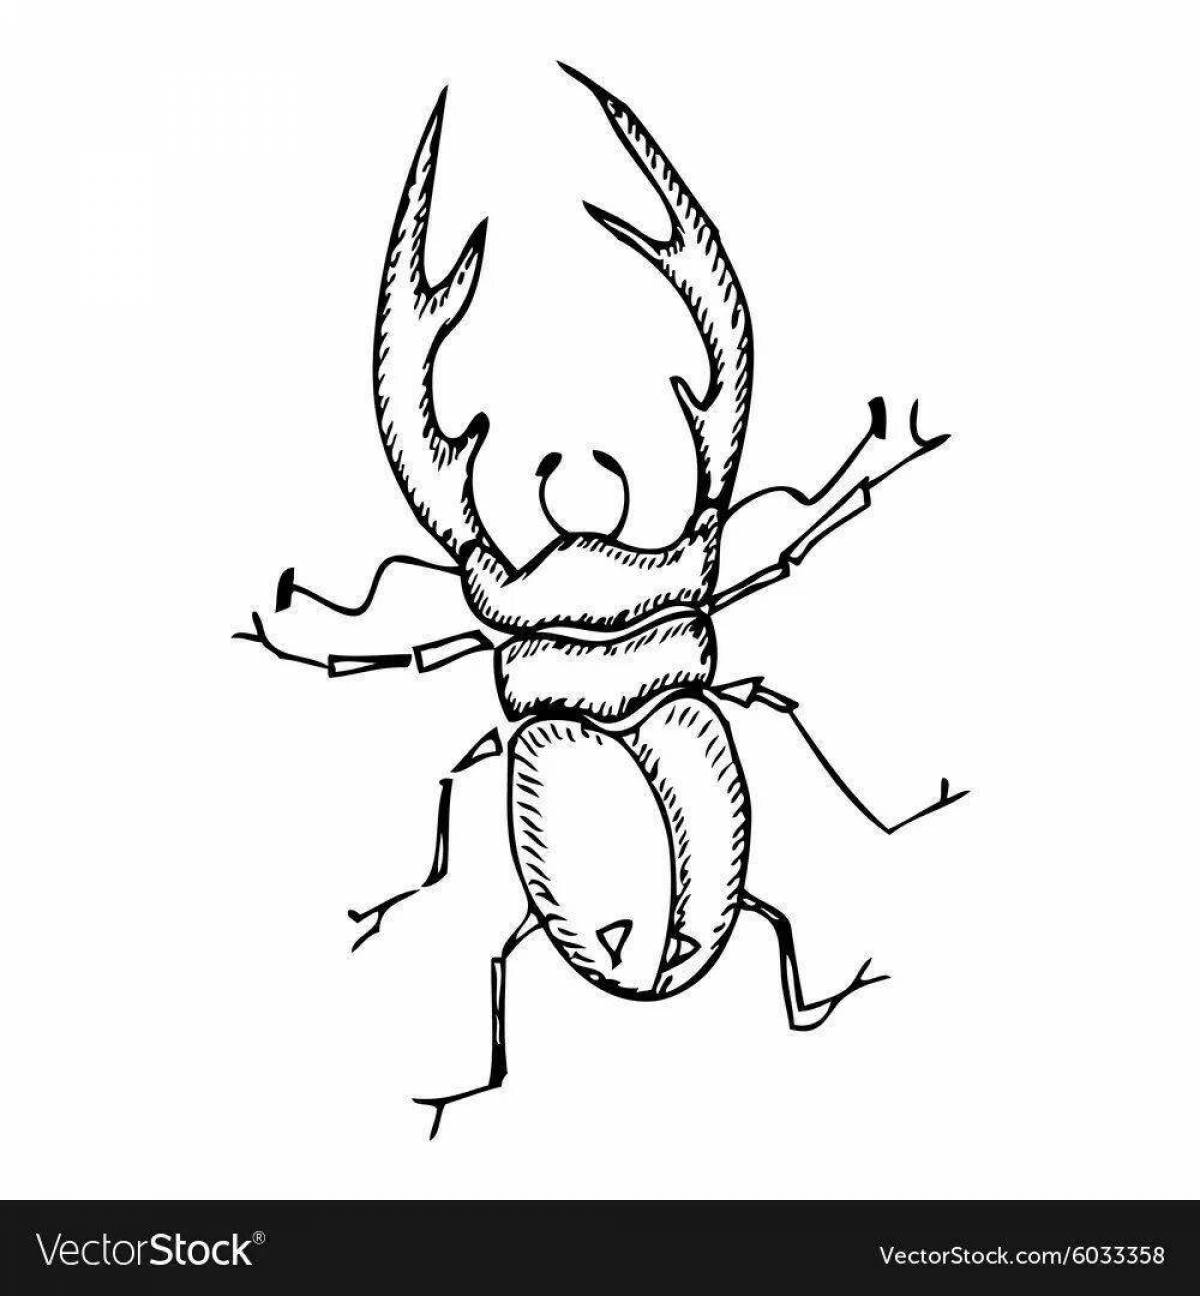 Dandelion beetle #6